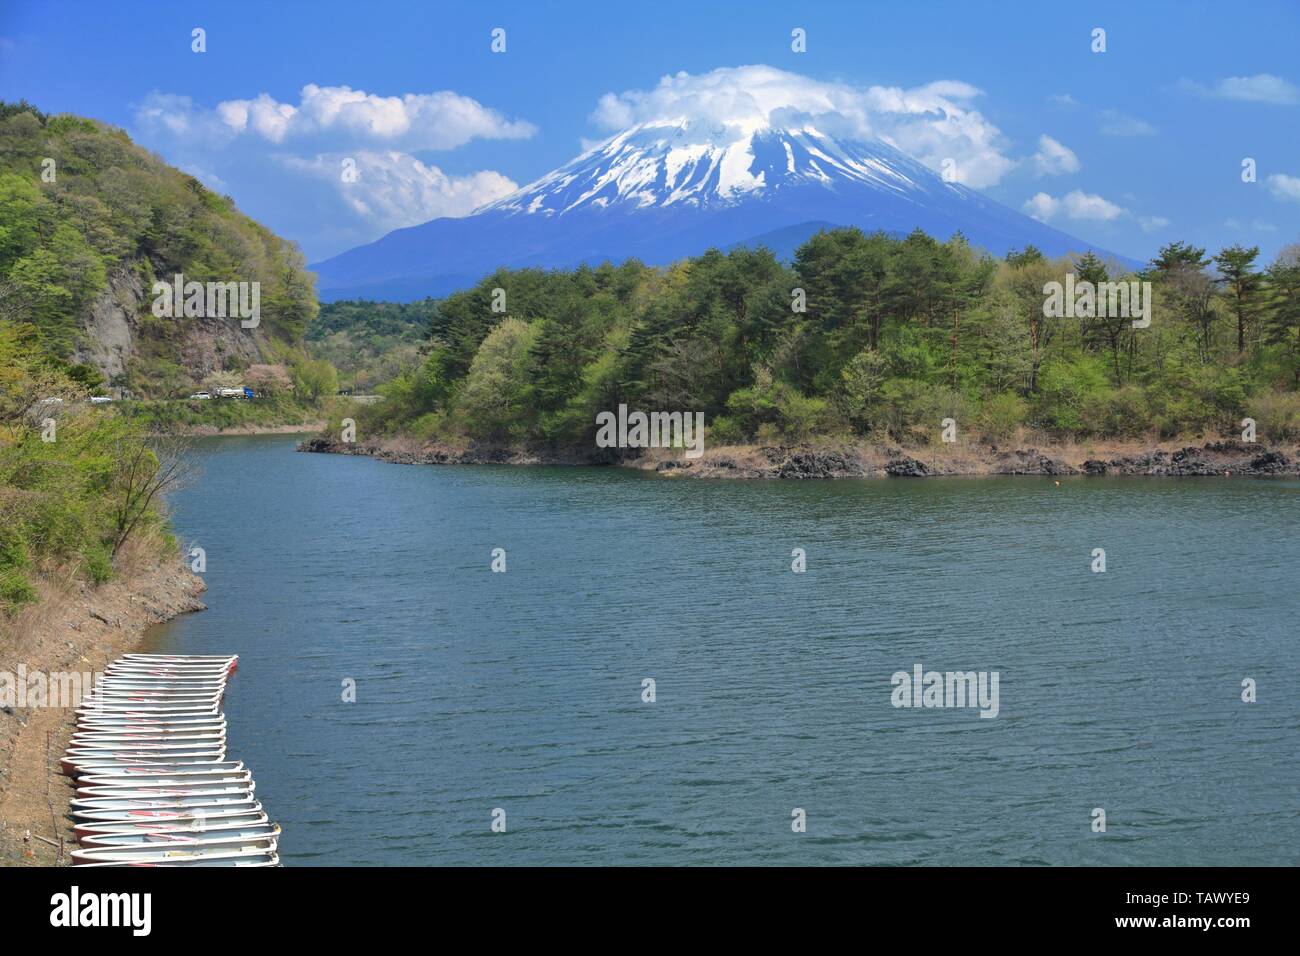 Japan Landschaft mit Berg Fuji-Lake Shoji (Shojiko) und den berühmten Vulkan. Teil von Fuji fünf Seen im Fuji-Hakone-Izu Nationalpark Stockfoto